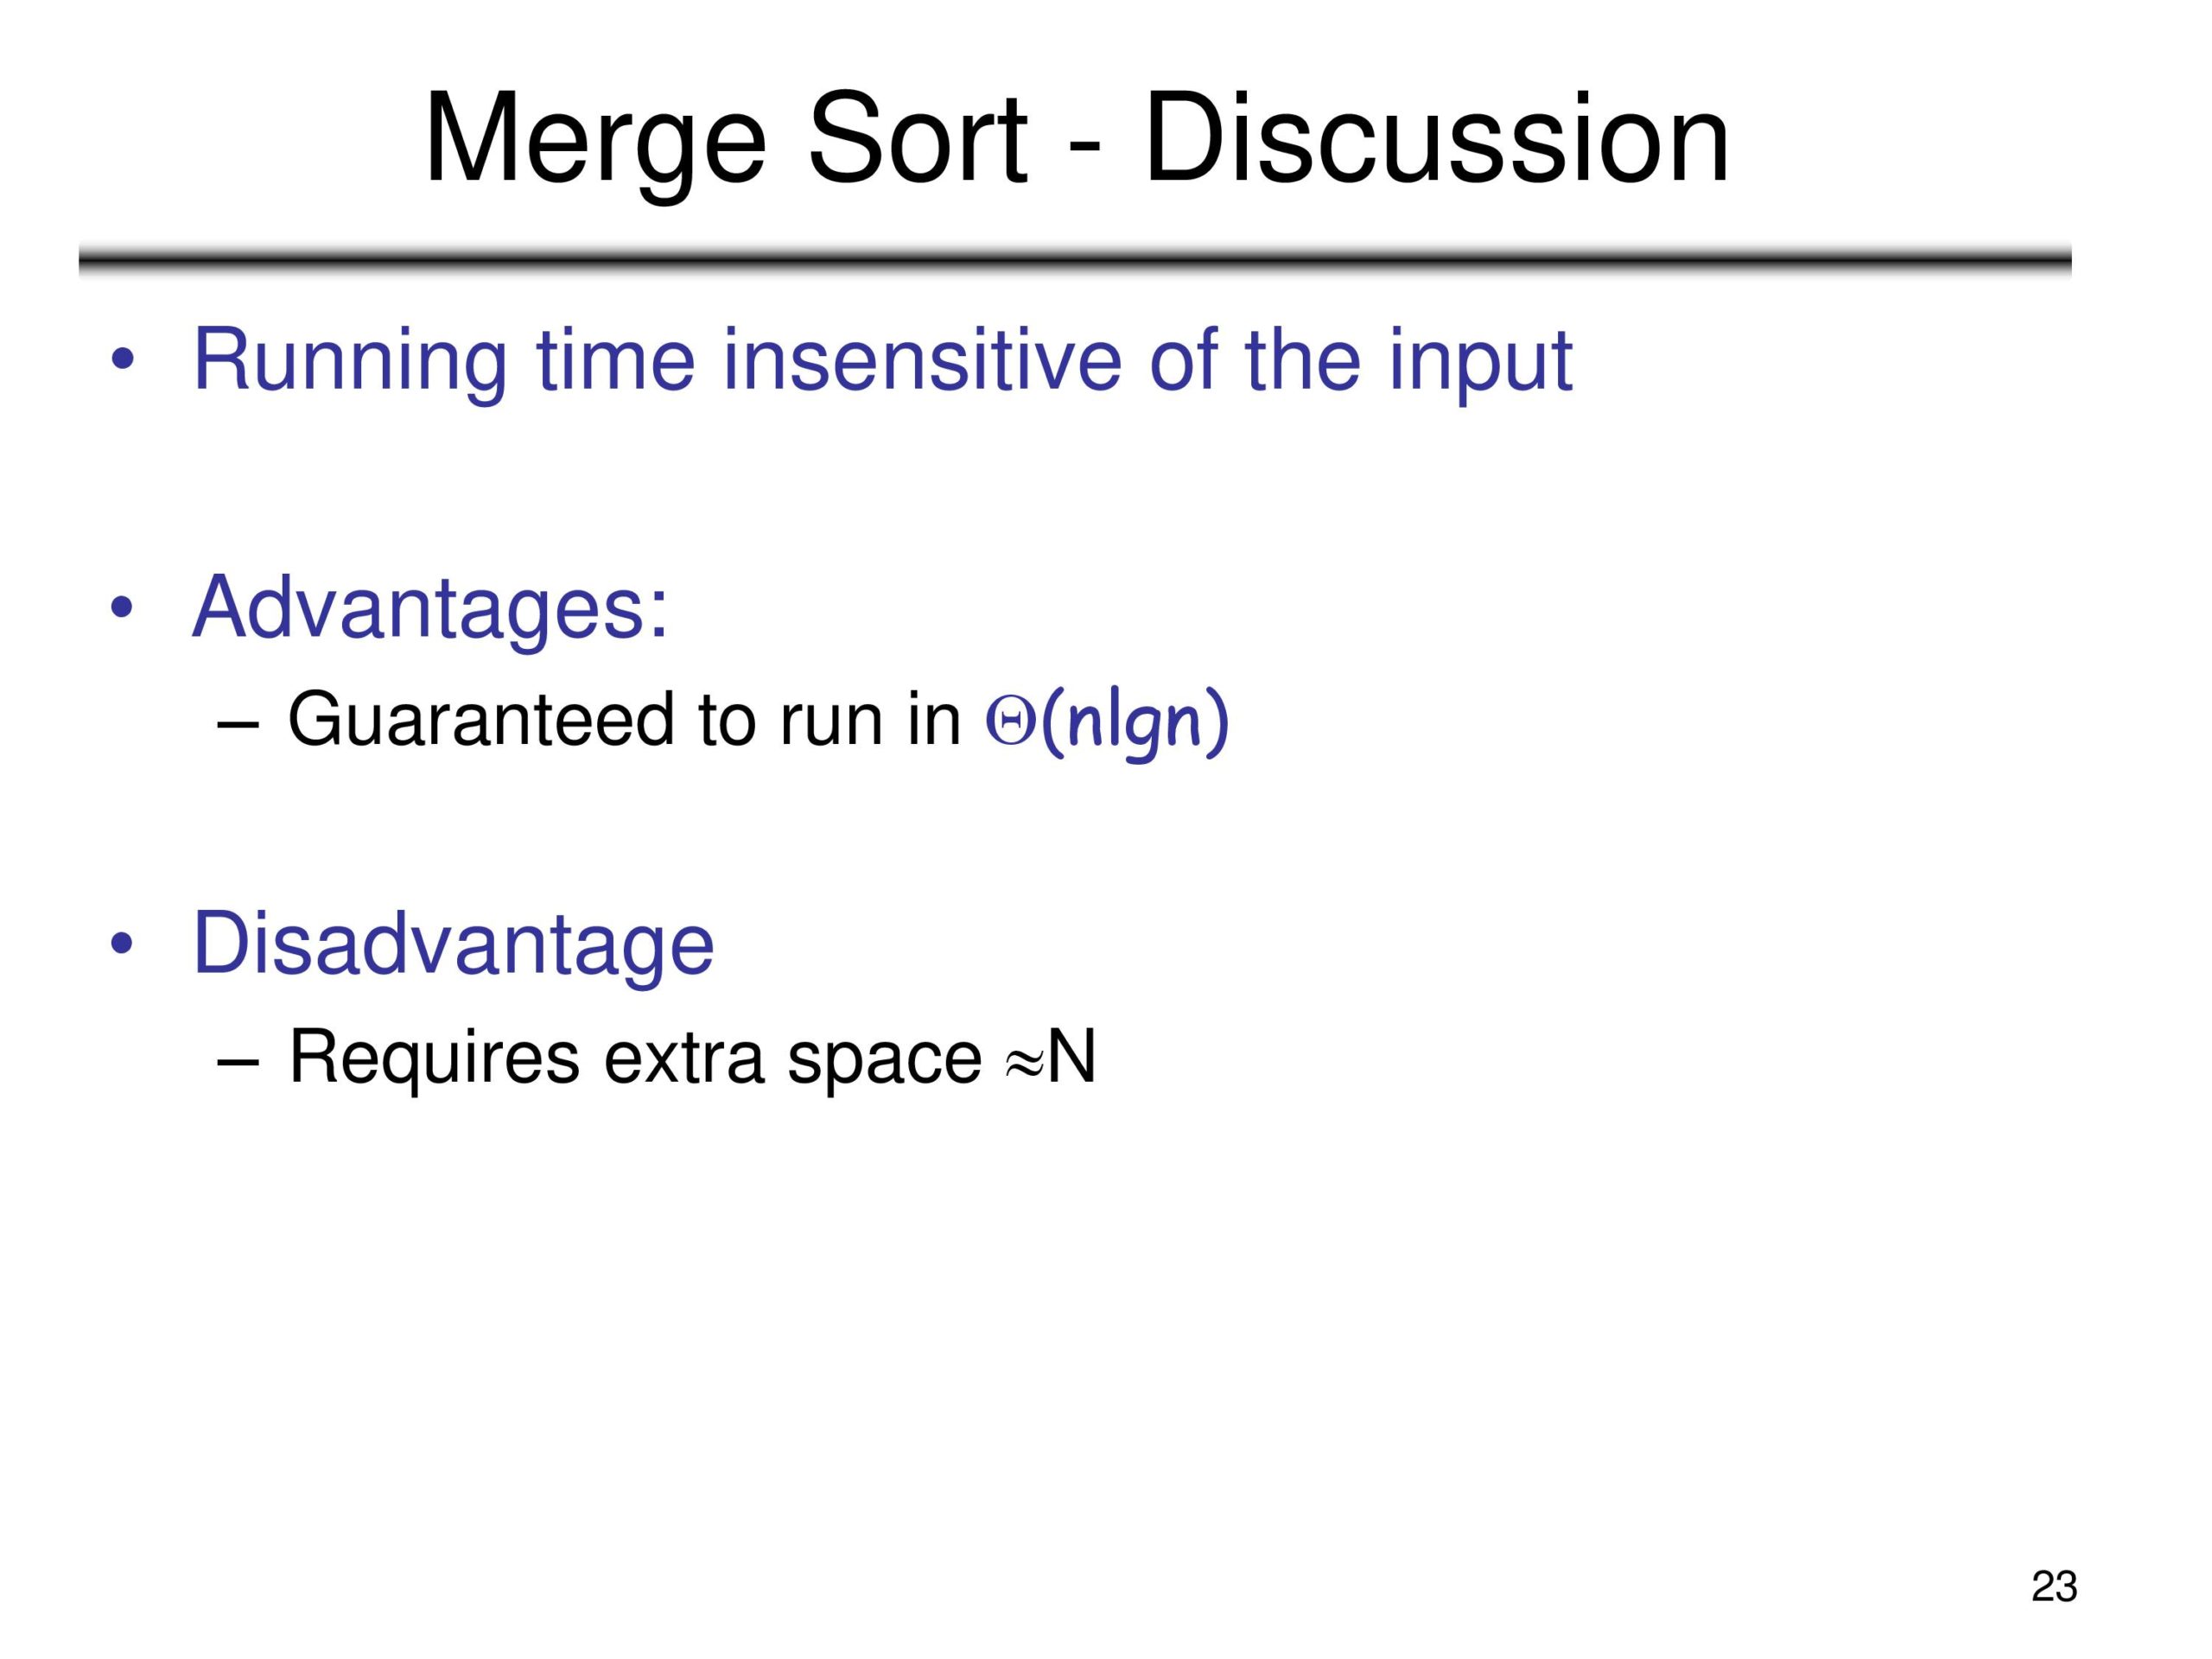 merge sort advantages and disadvantages